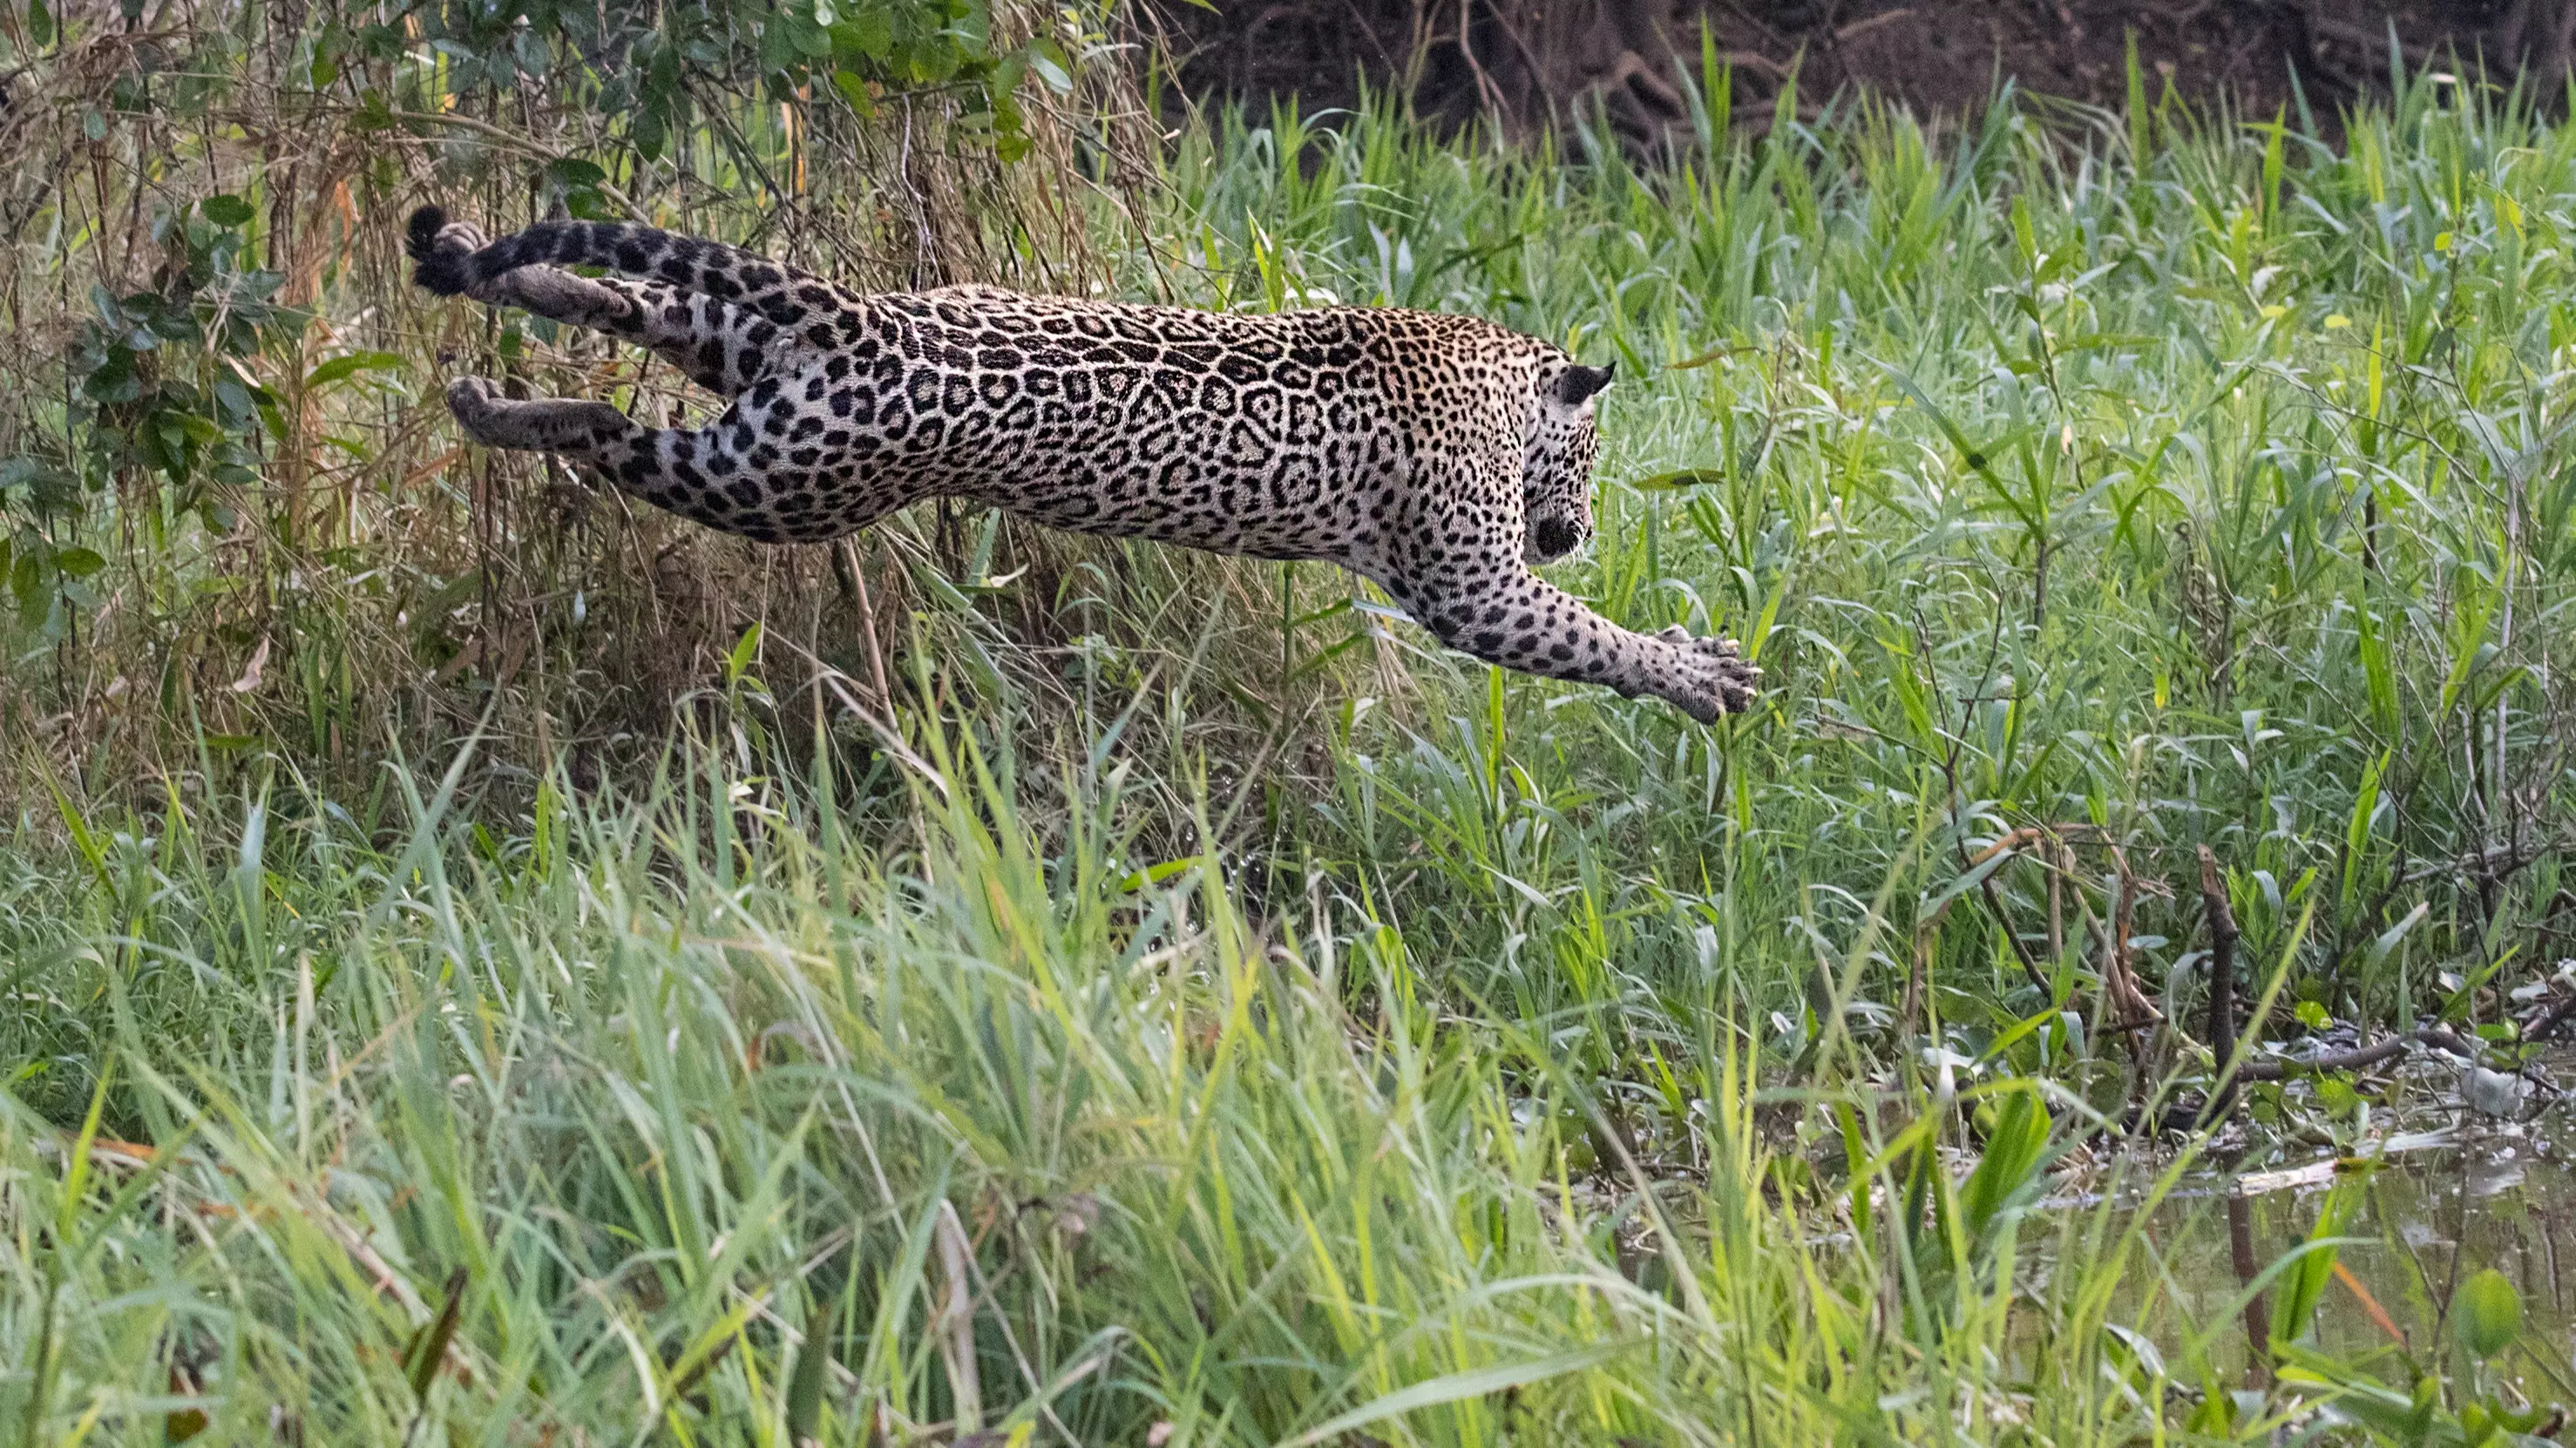 Incredible Footage Shows Jaguar Pouncing On Caiman In River 10 Feet Below